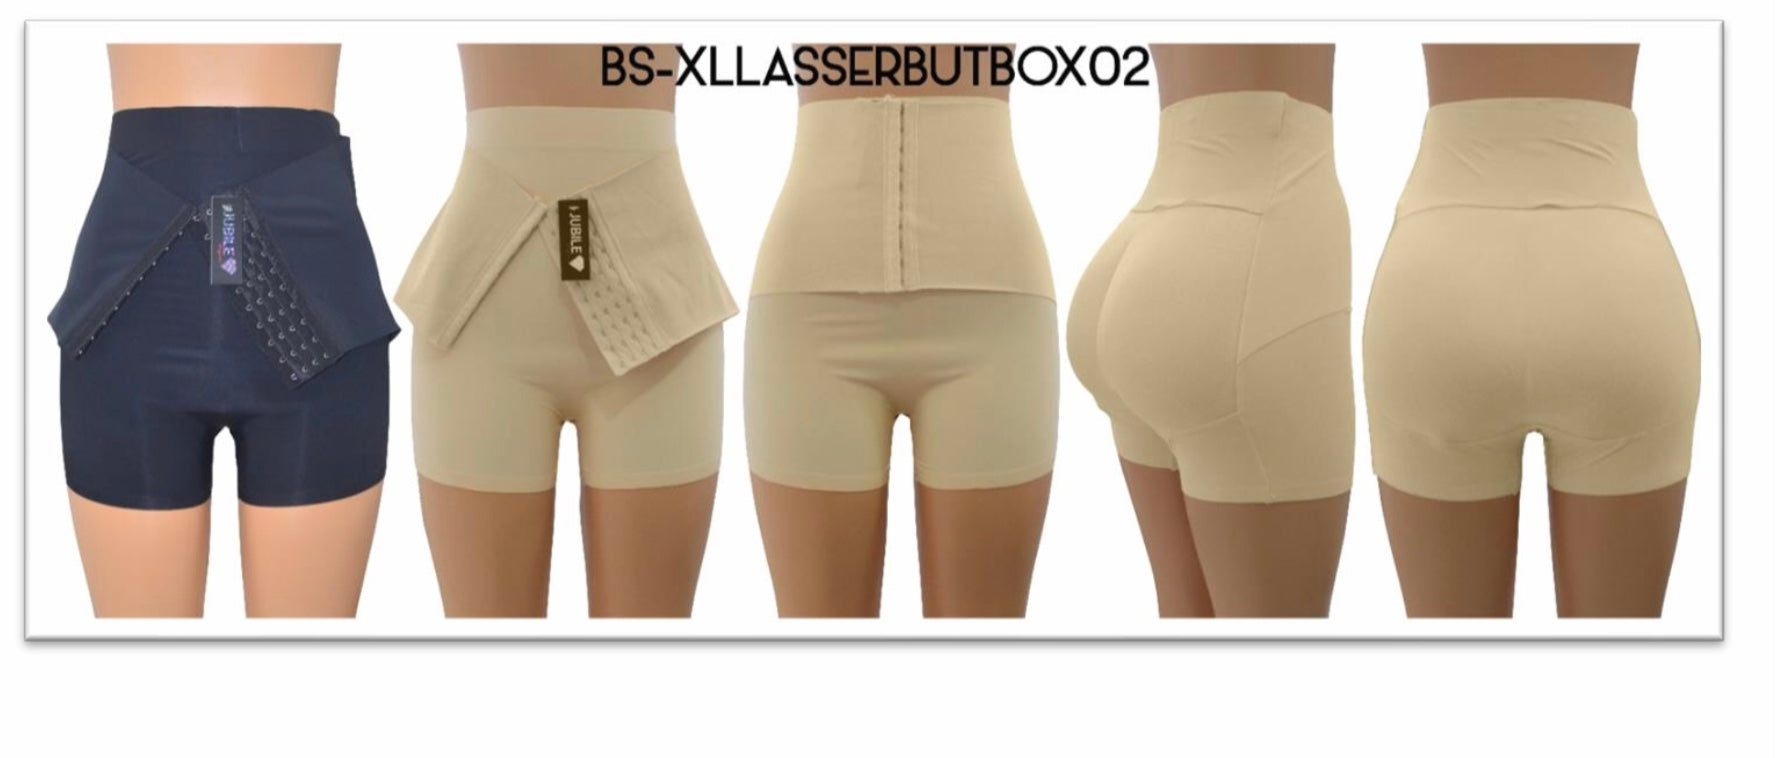 Columbian Panty Faja-High Waist  Adjustable Smart Compression Shape Contouring Fabric